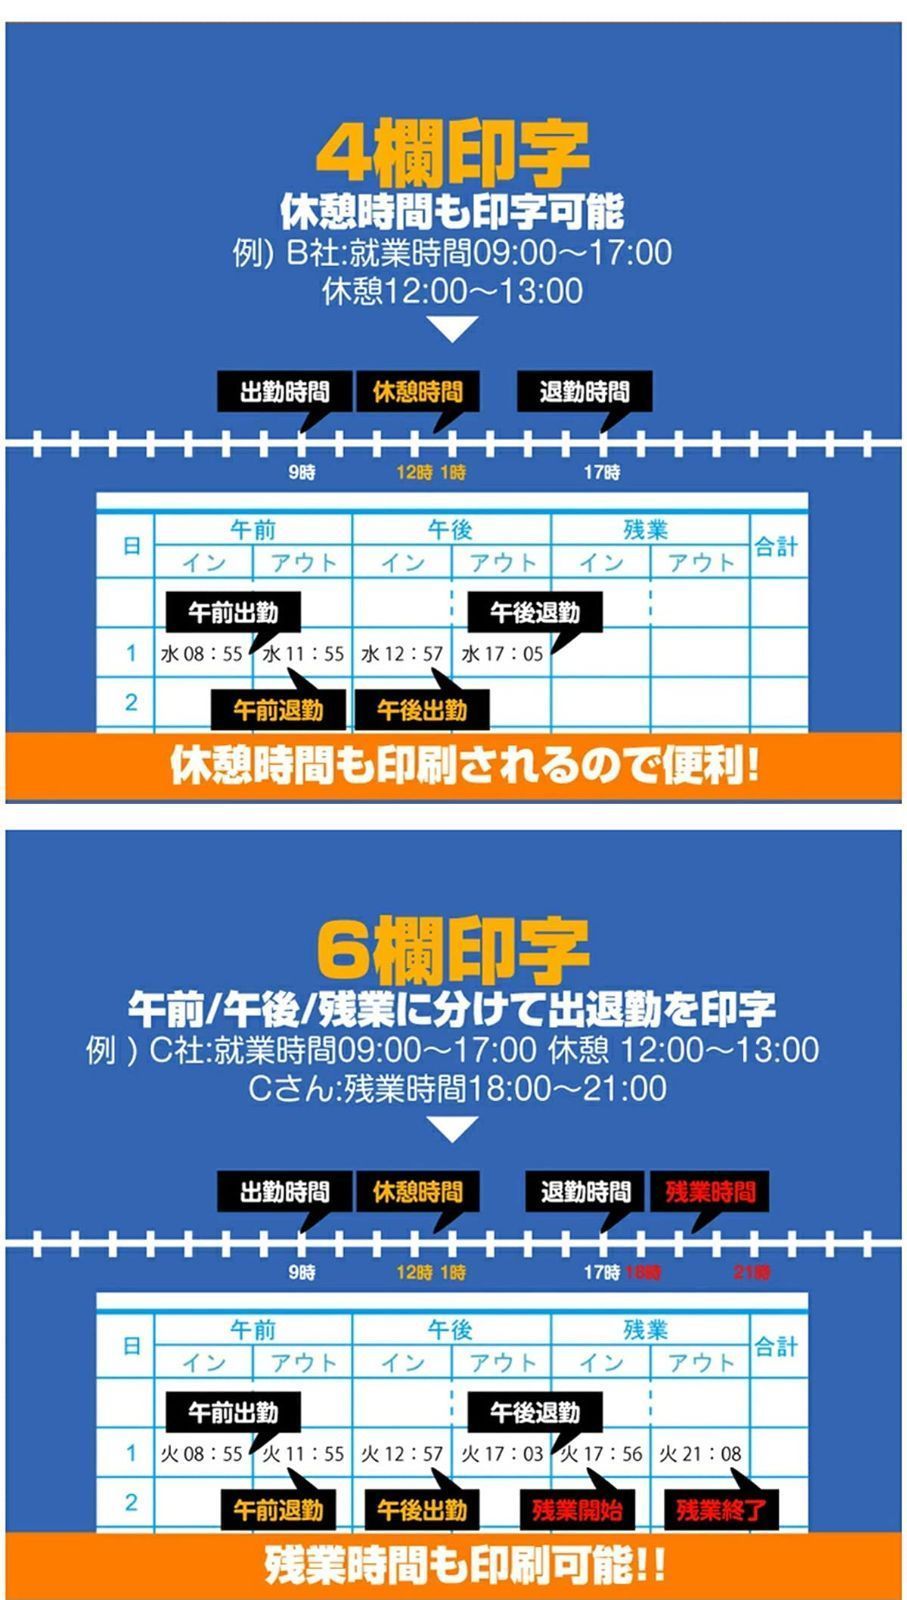 TOKAIZ タイムレコーダー 本体 6欄印字可能 両面印字モデル タイムカード５０枚付き TR-001s - 5